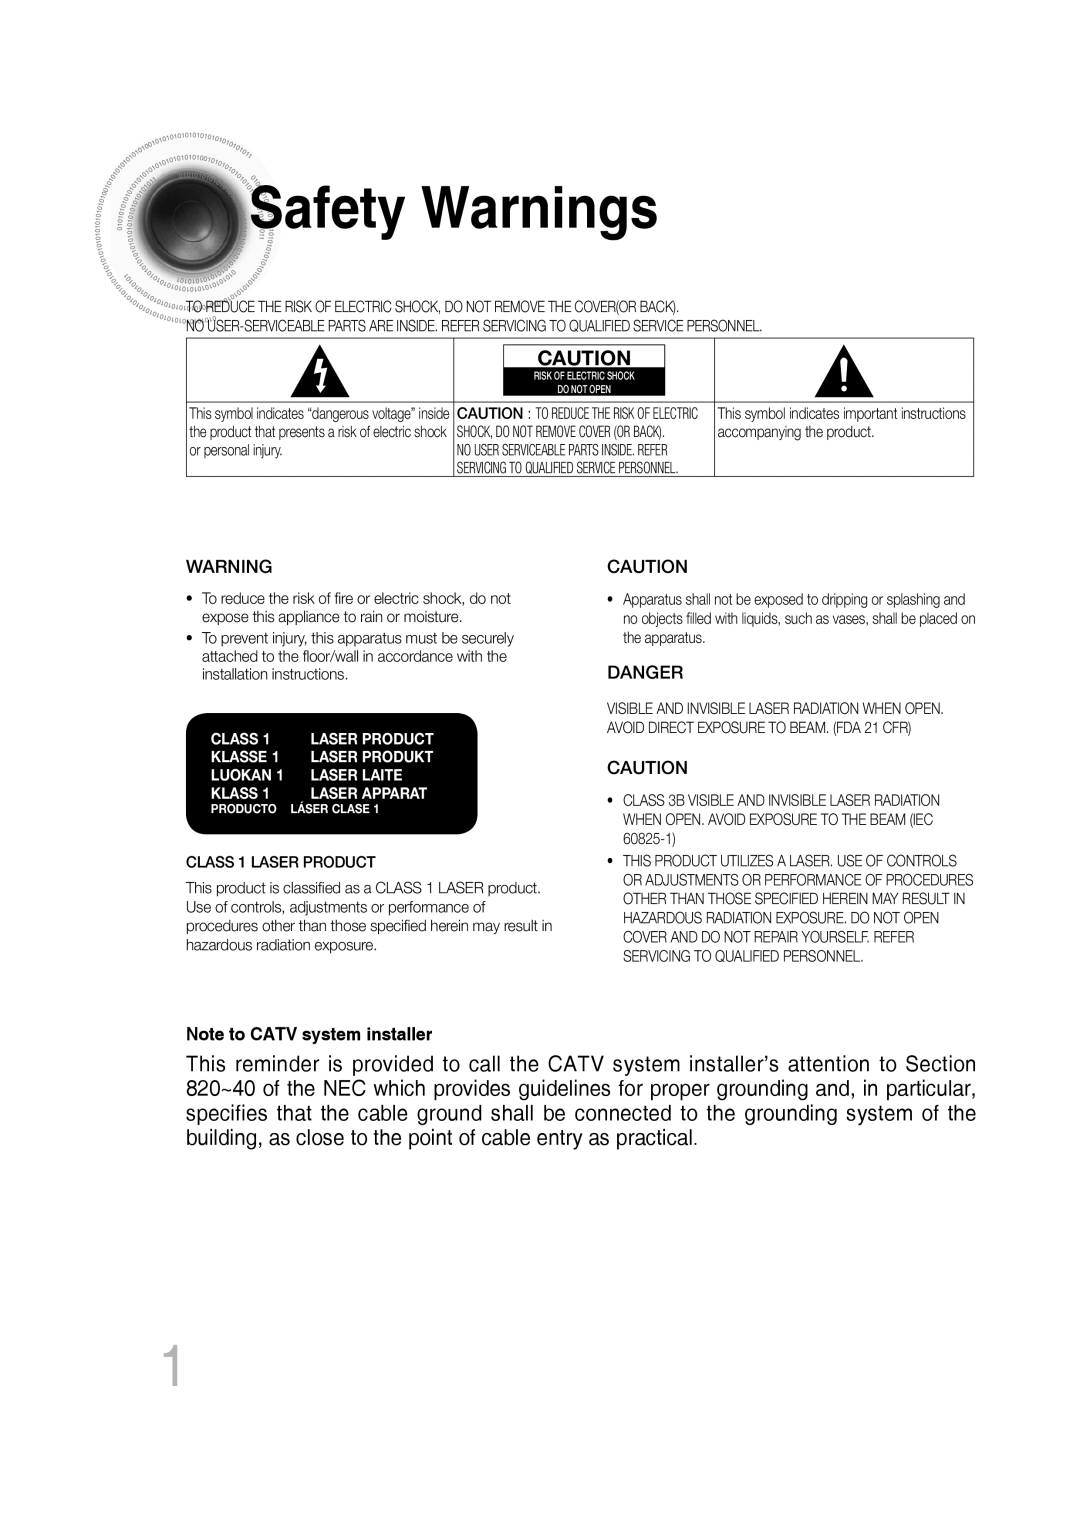 Samsung AH68-02272Y, MM-C550D, MM-C530D manual Safety Warnings, Danger, Note to CATV system installer, KLASS 1 LASER APPARAT 